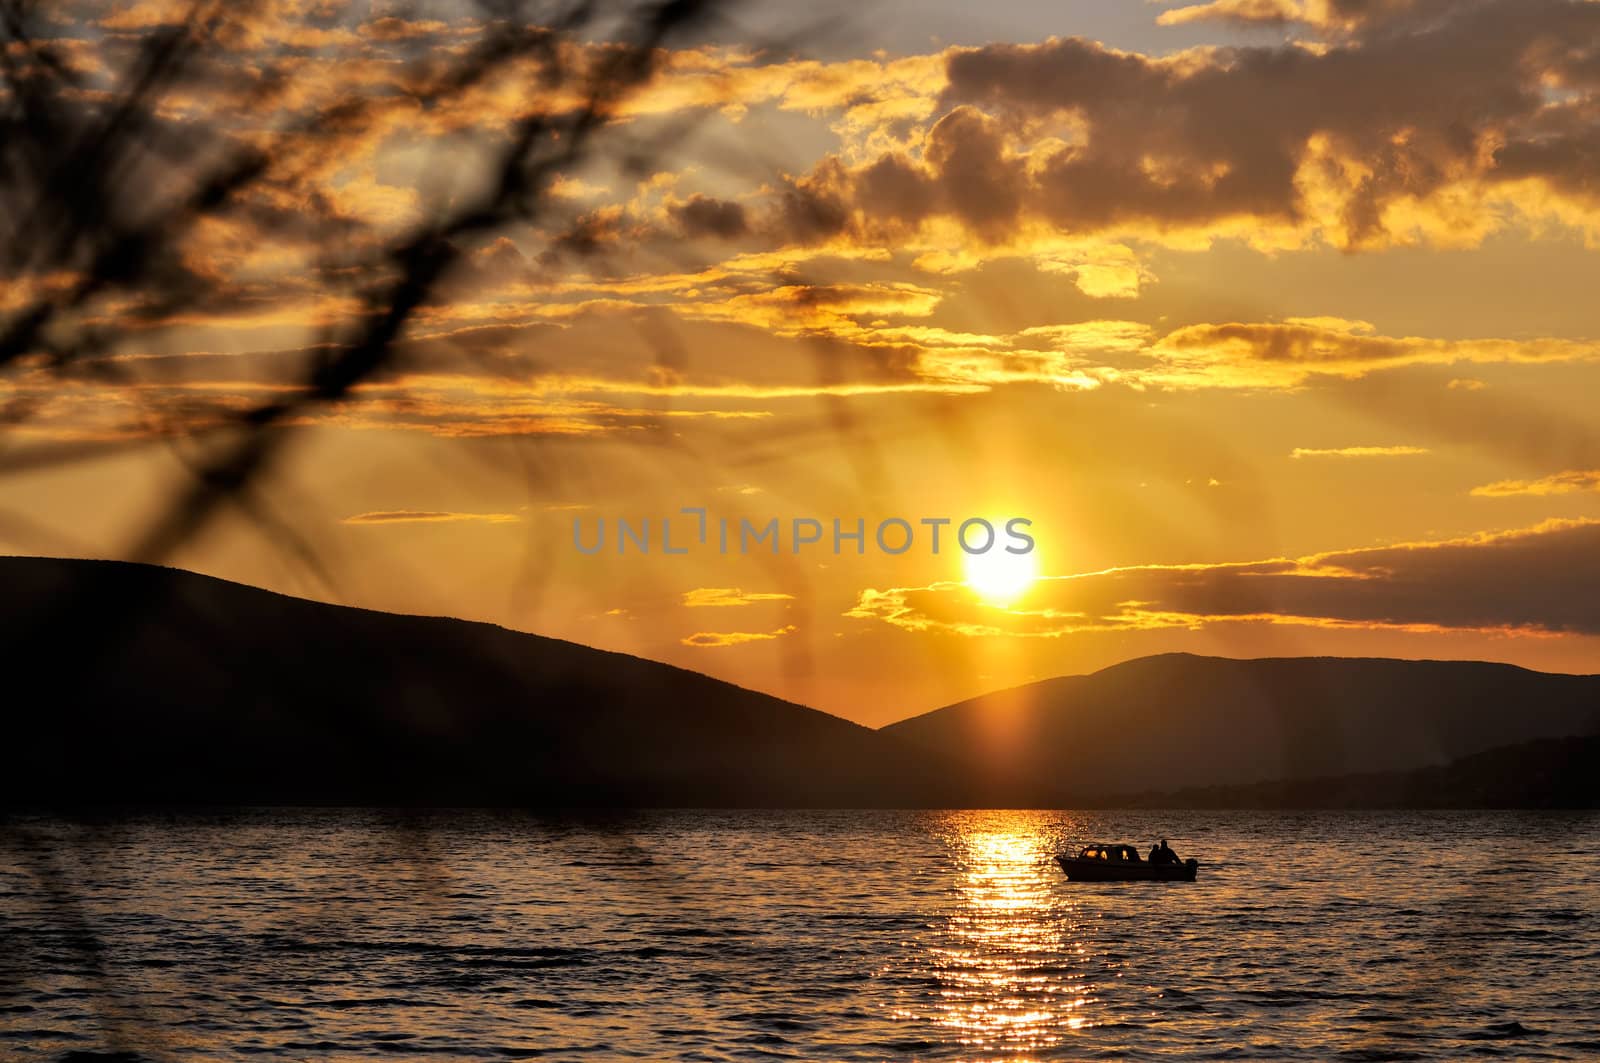 Boat on sea at sunset by Sevaljevic